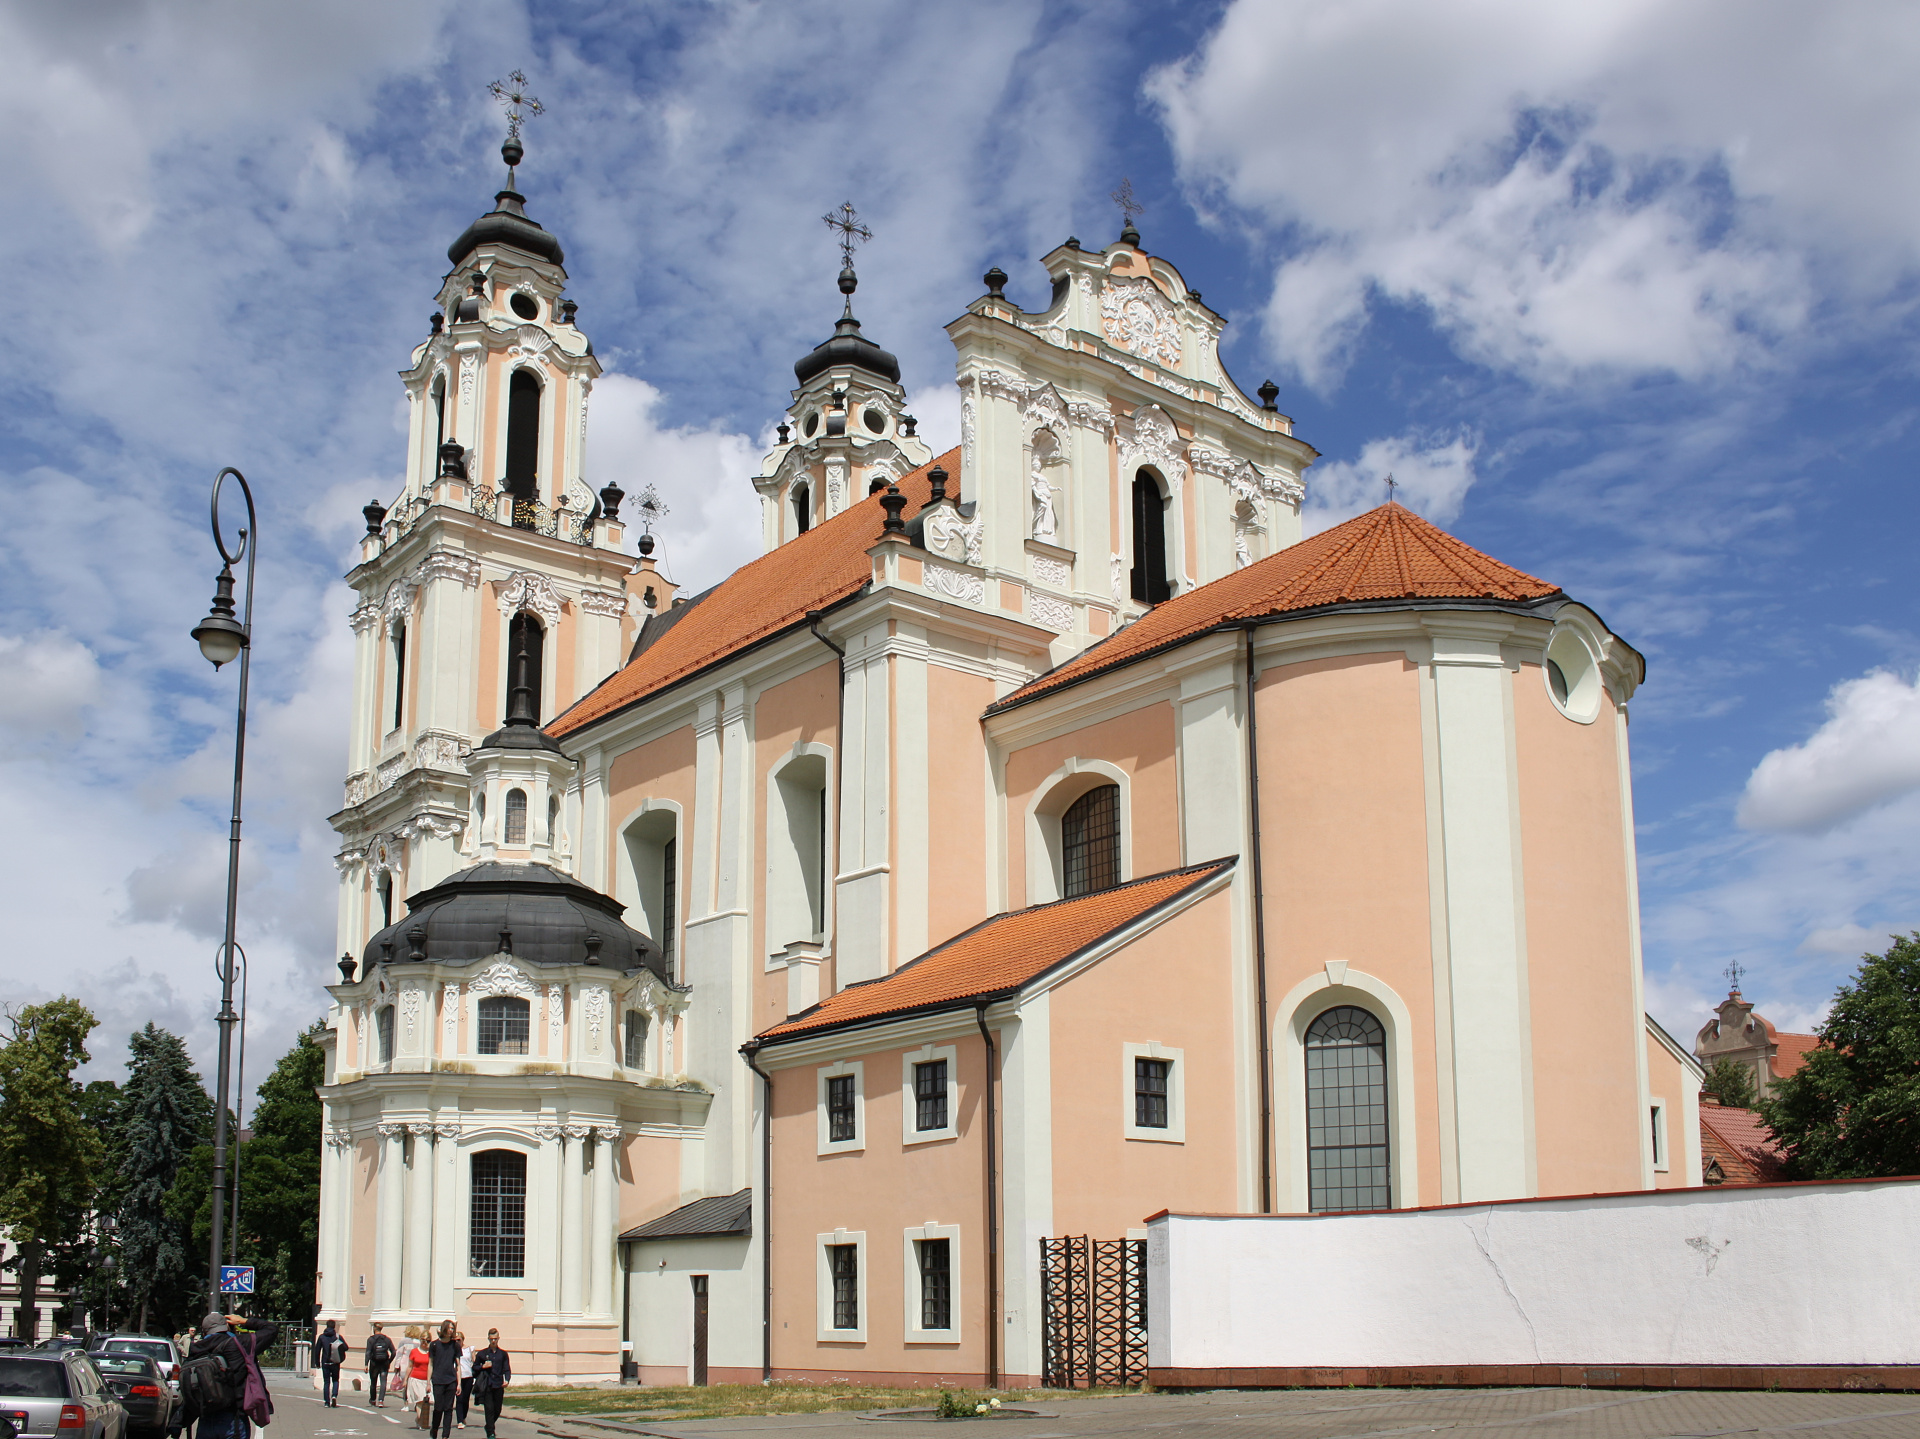 Šv. Kotrynos bažnyčia - Kościół św. Katarzyny (Podróże » Wilno » Kościoły i cerkwie)